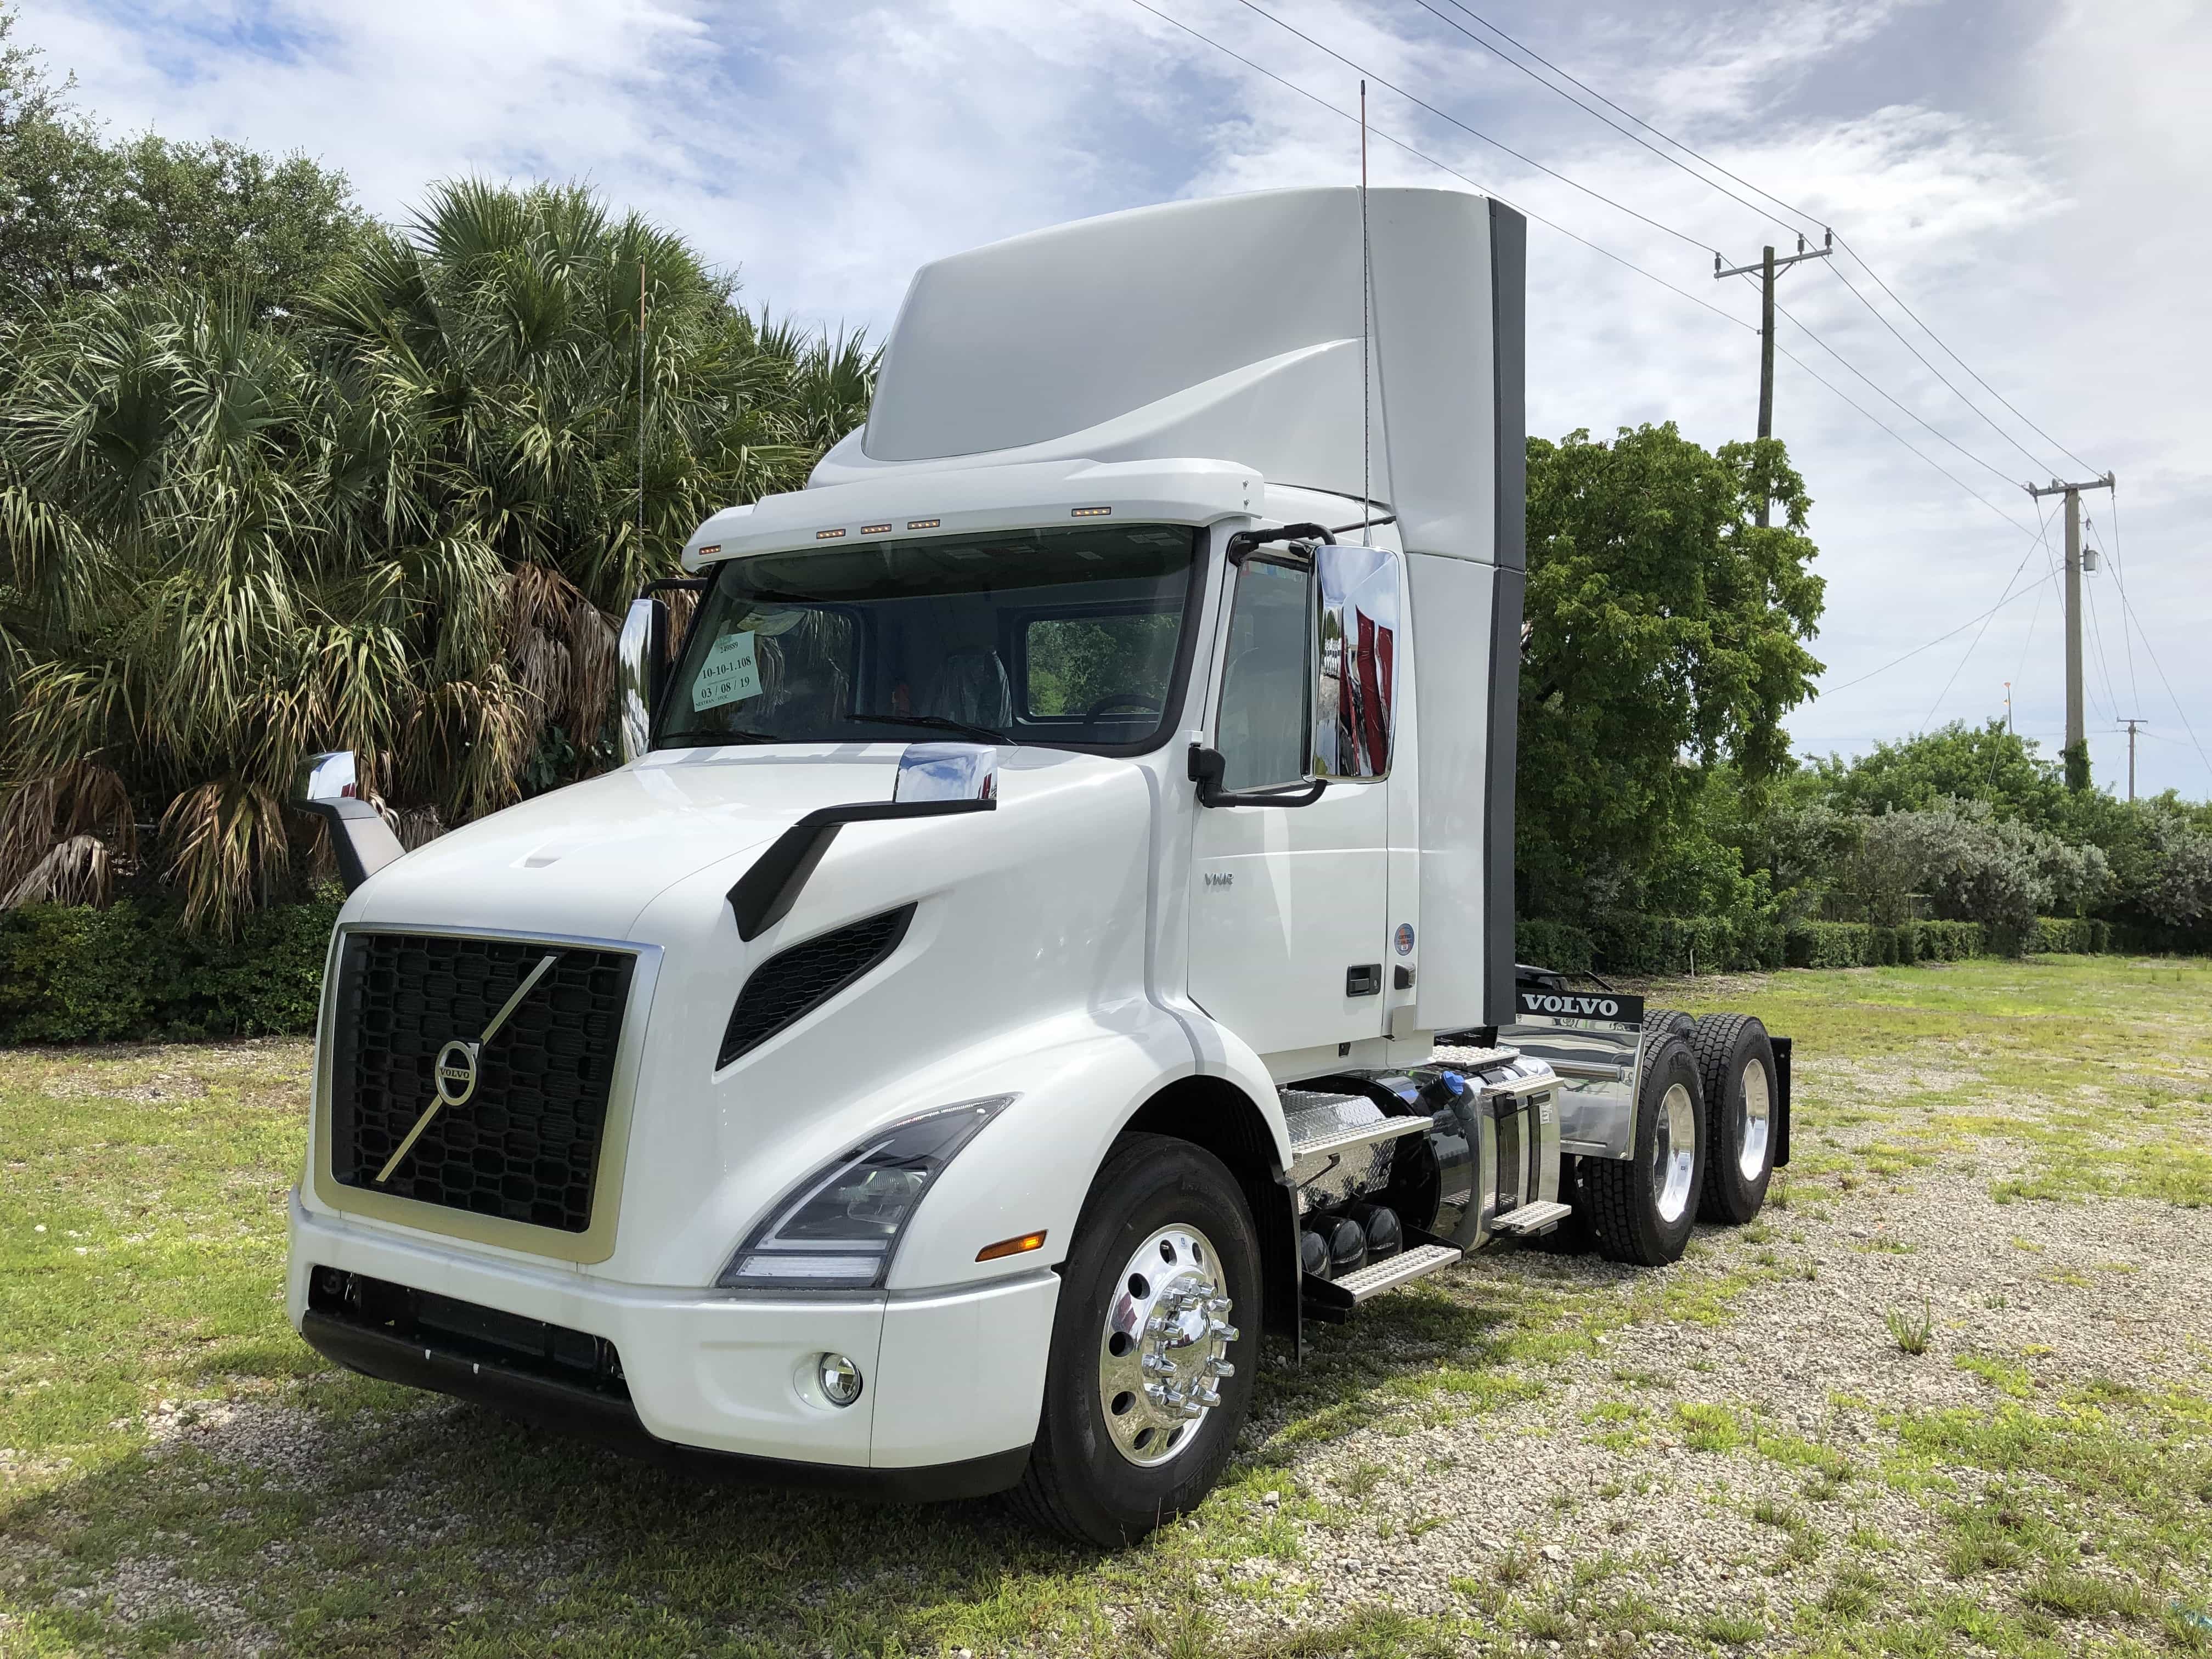 Nextran Truck Centers - Orlando, FL, US, used trucks for sale near me